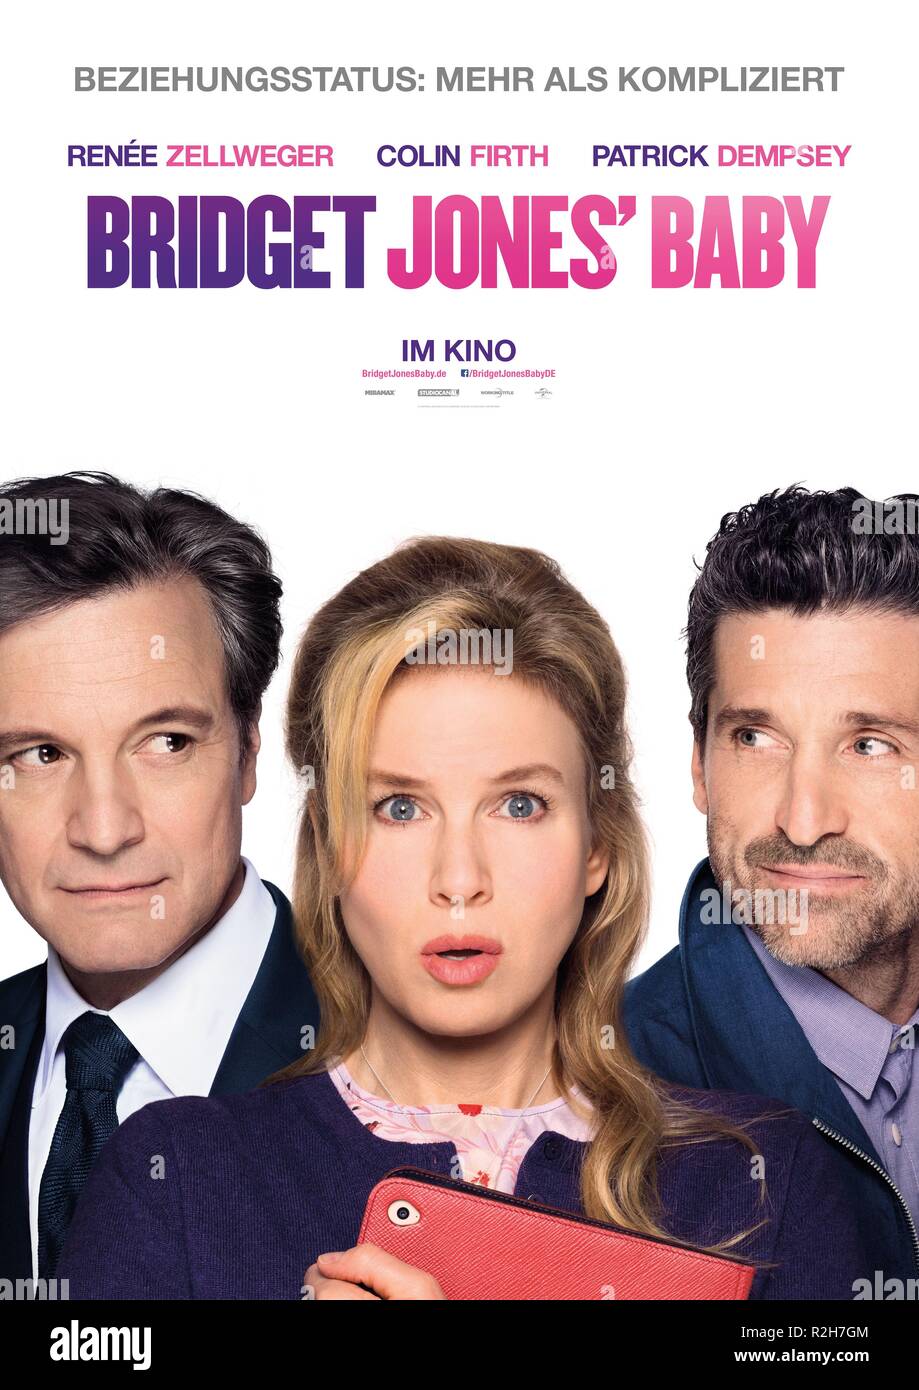 Bridget Jones's Baby Year : 2016 UK / USA Director : Sharon Maguire Colin Firth, Renée Zellweger, Patrick Dempsey Movie poster (Ger) Stock Photo